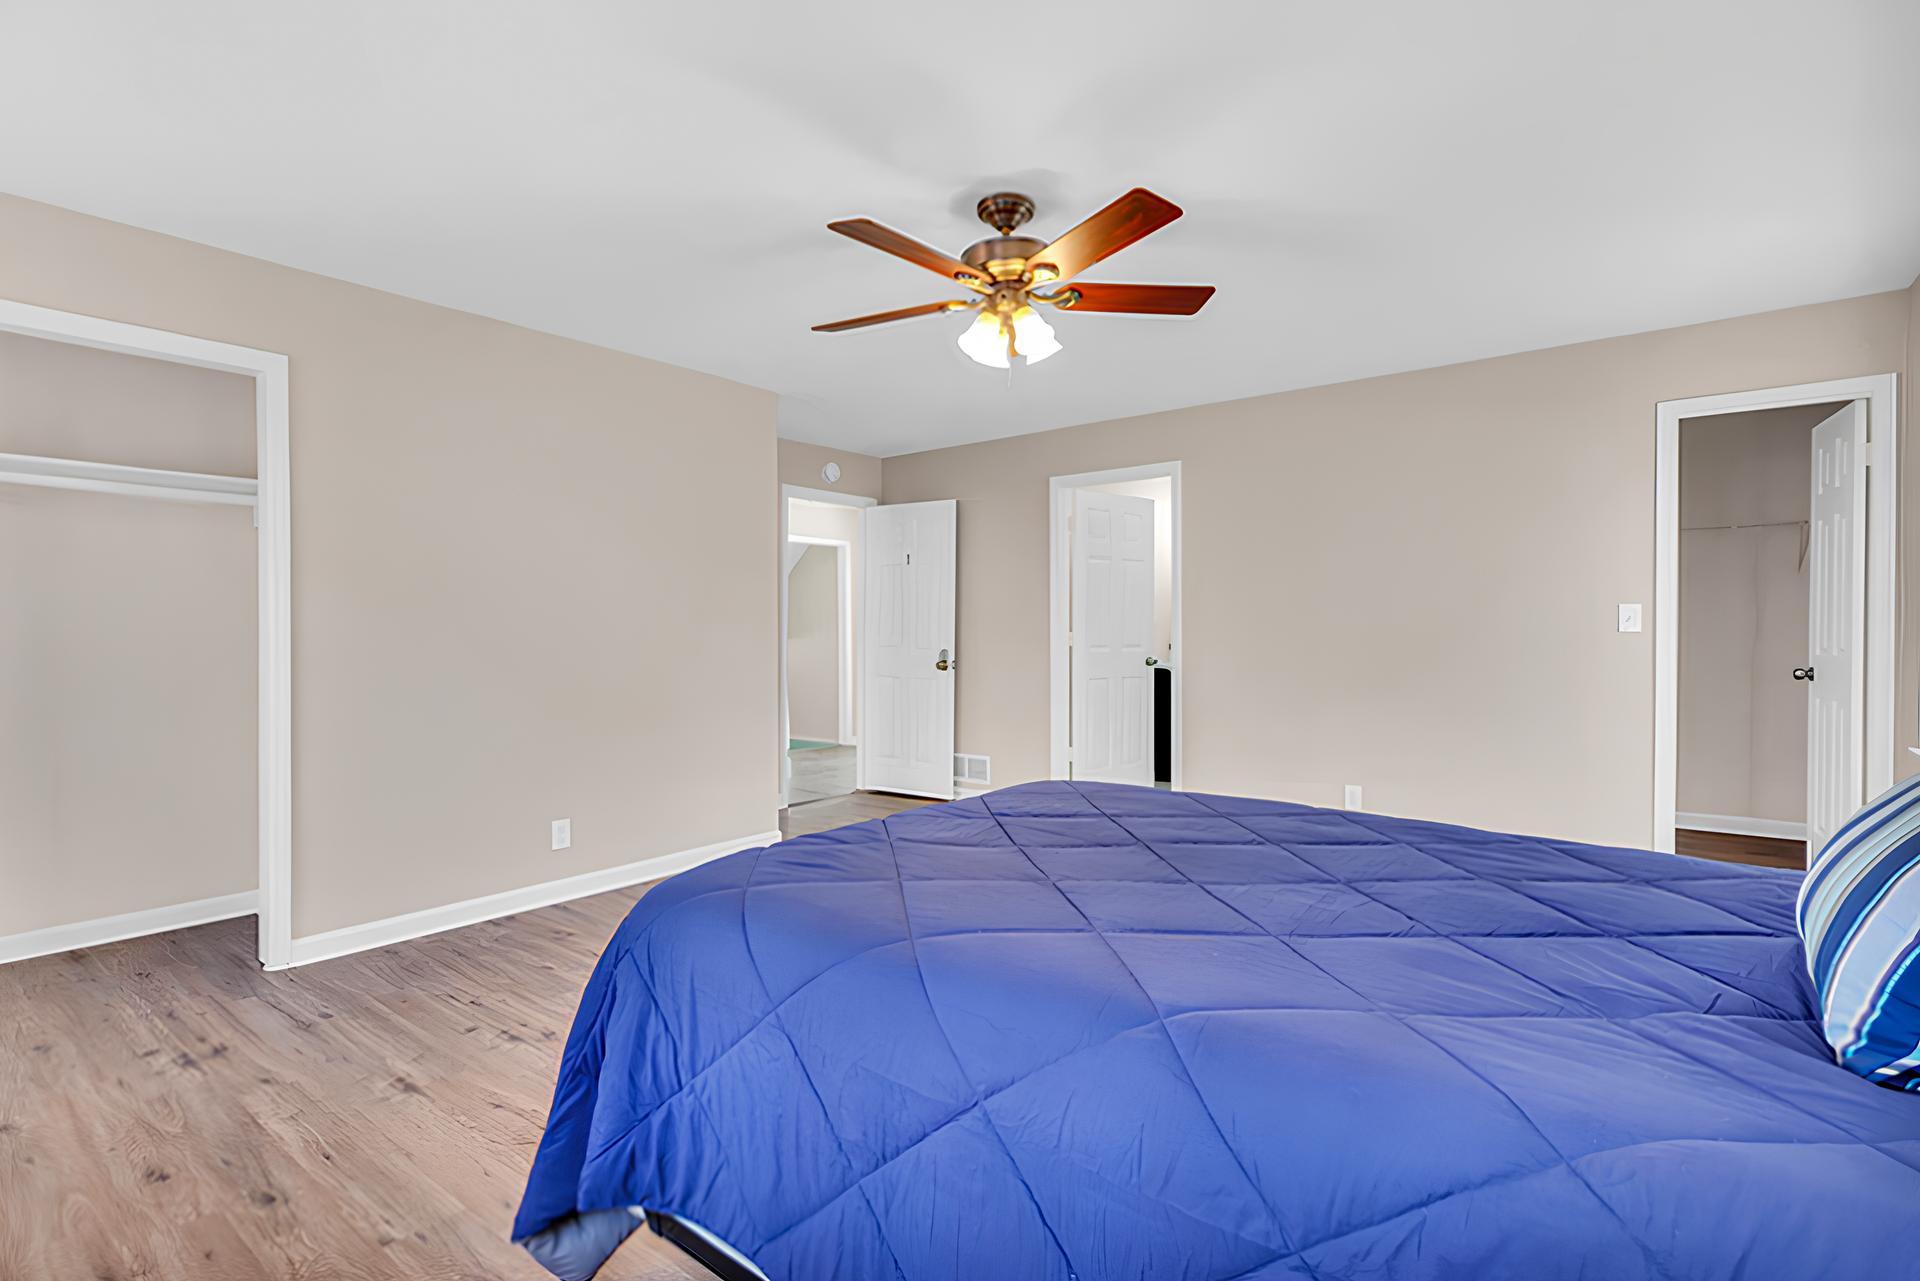 bedroom, detected: ceiling fan, window blind